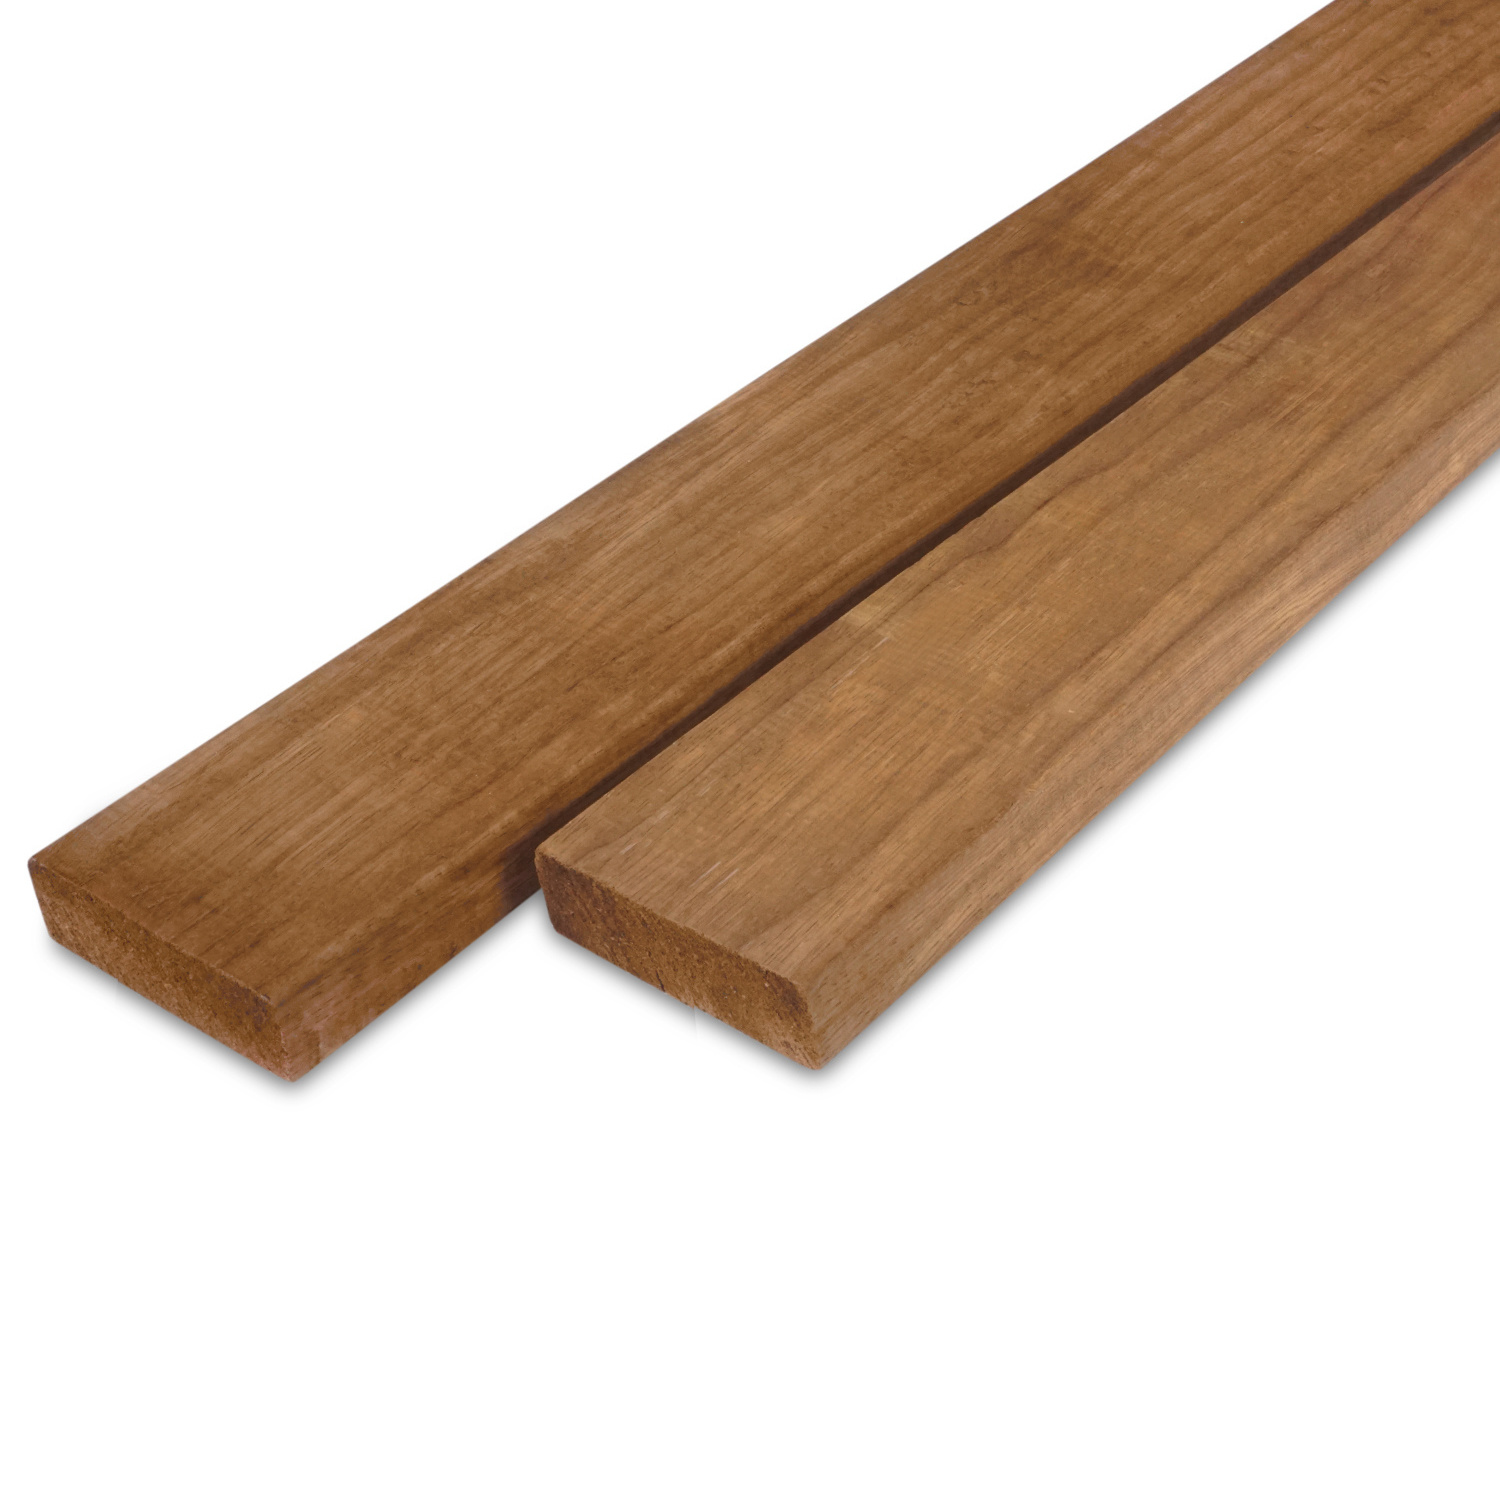  Thermowood fraké rhombus deel - profiel - plank 21x90mm - geschaafd - kunstmatig gedroogd (kd 8-12%) - thermisch gemodificeerd fraké hout (thermohout)